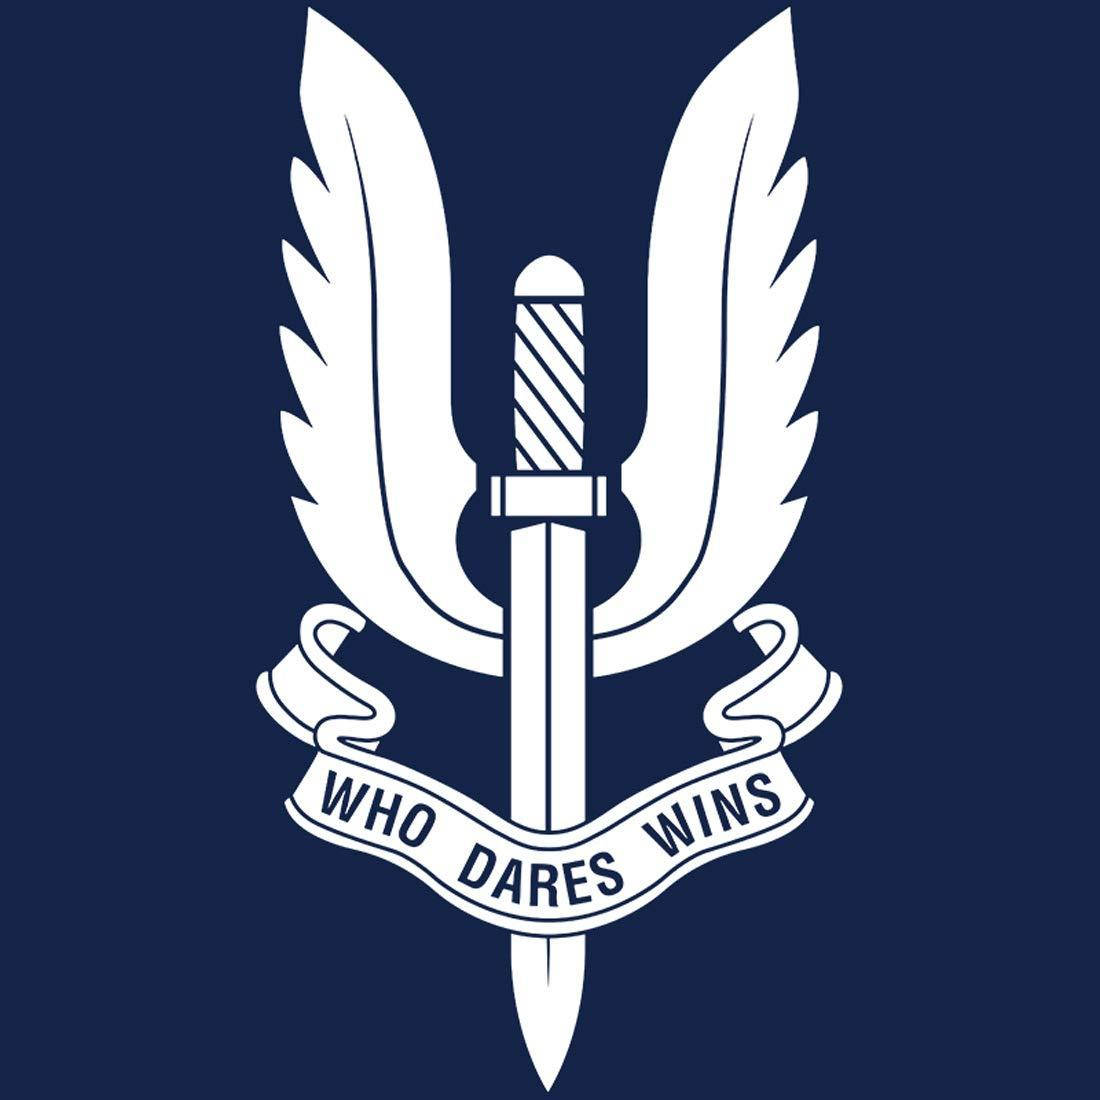 Balidan Badge In Navy Blue Background